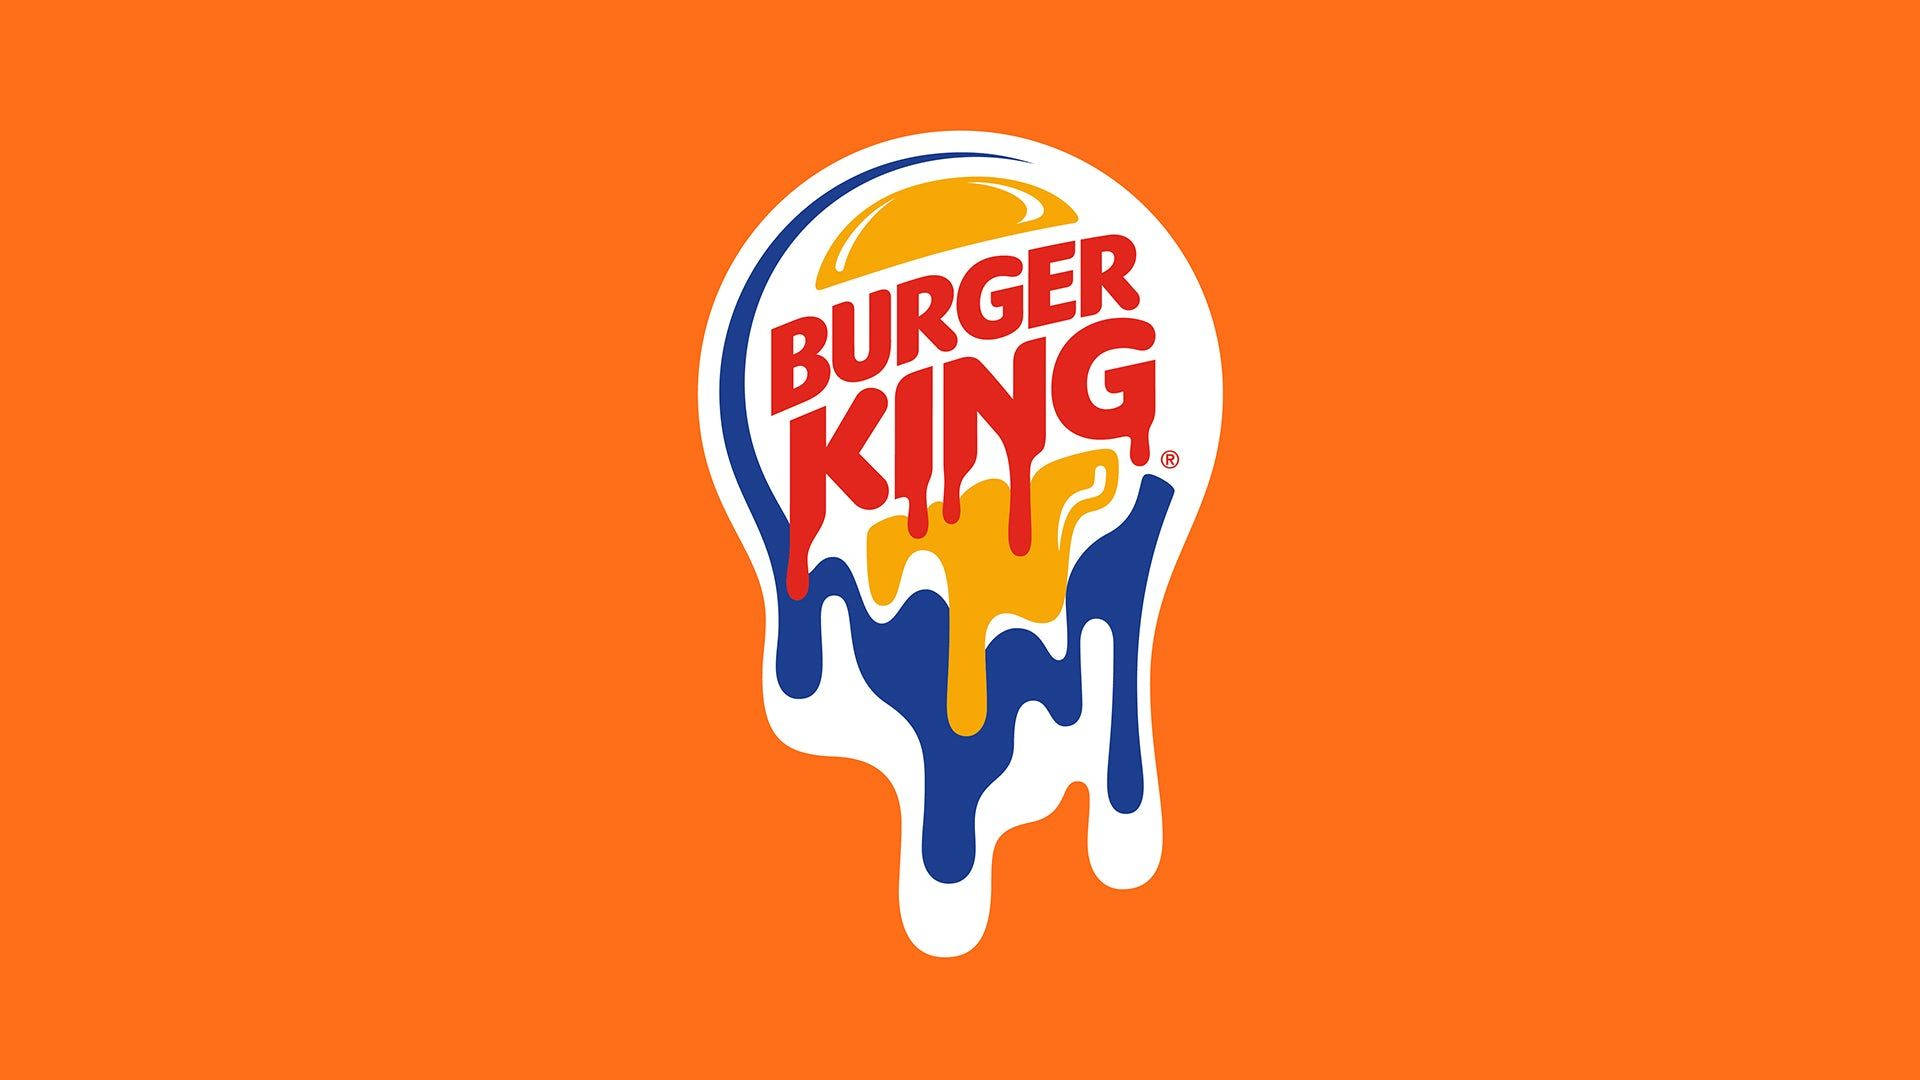 Smutsigburger King-logga Wallpaper